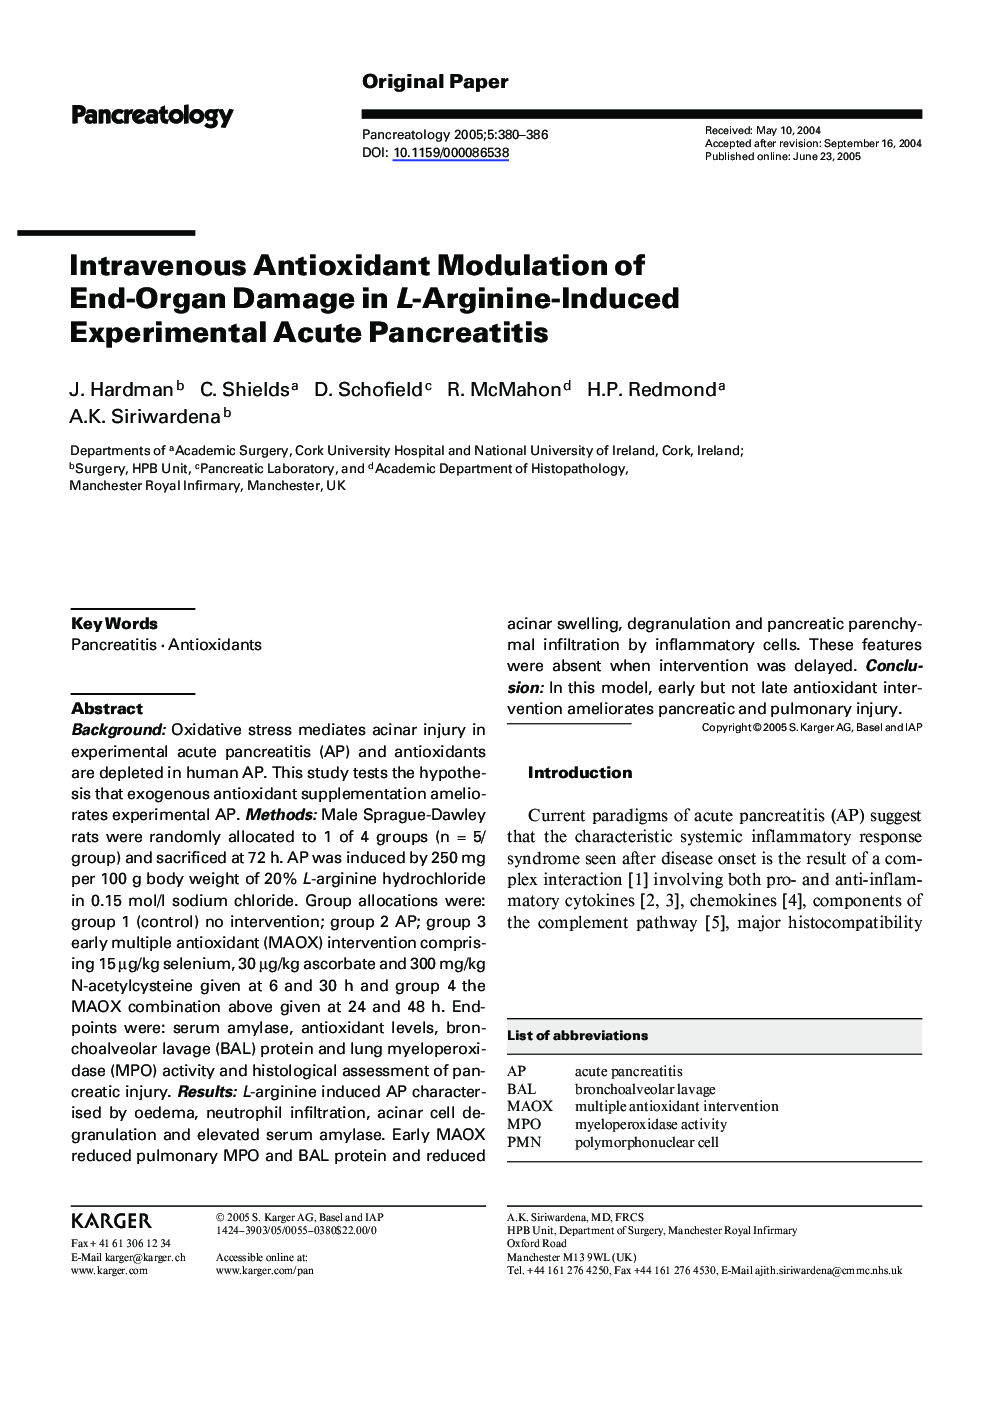 Intravenous antioxidant modulation of end-organ damage in L-arginine-induced experimental acute pancreatitis